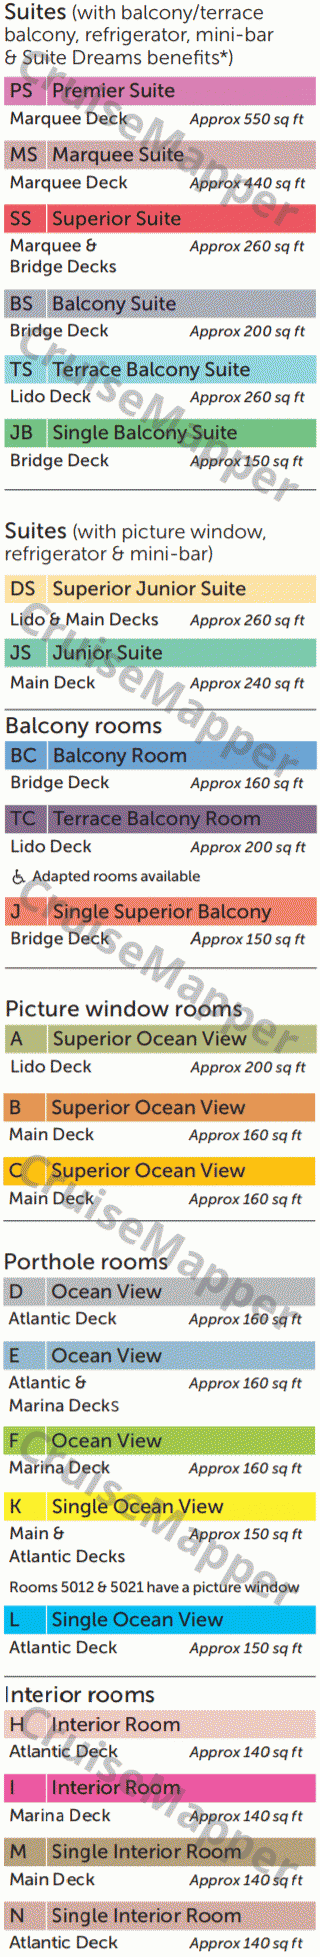 Boudicca deck 7 plan (Lido-Promenade-Cabins) legend